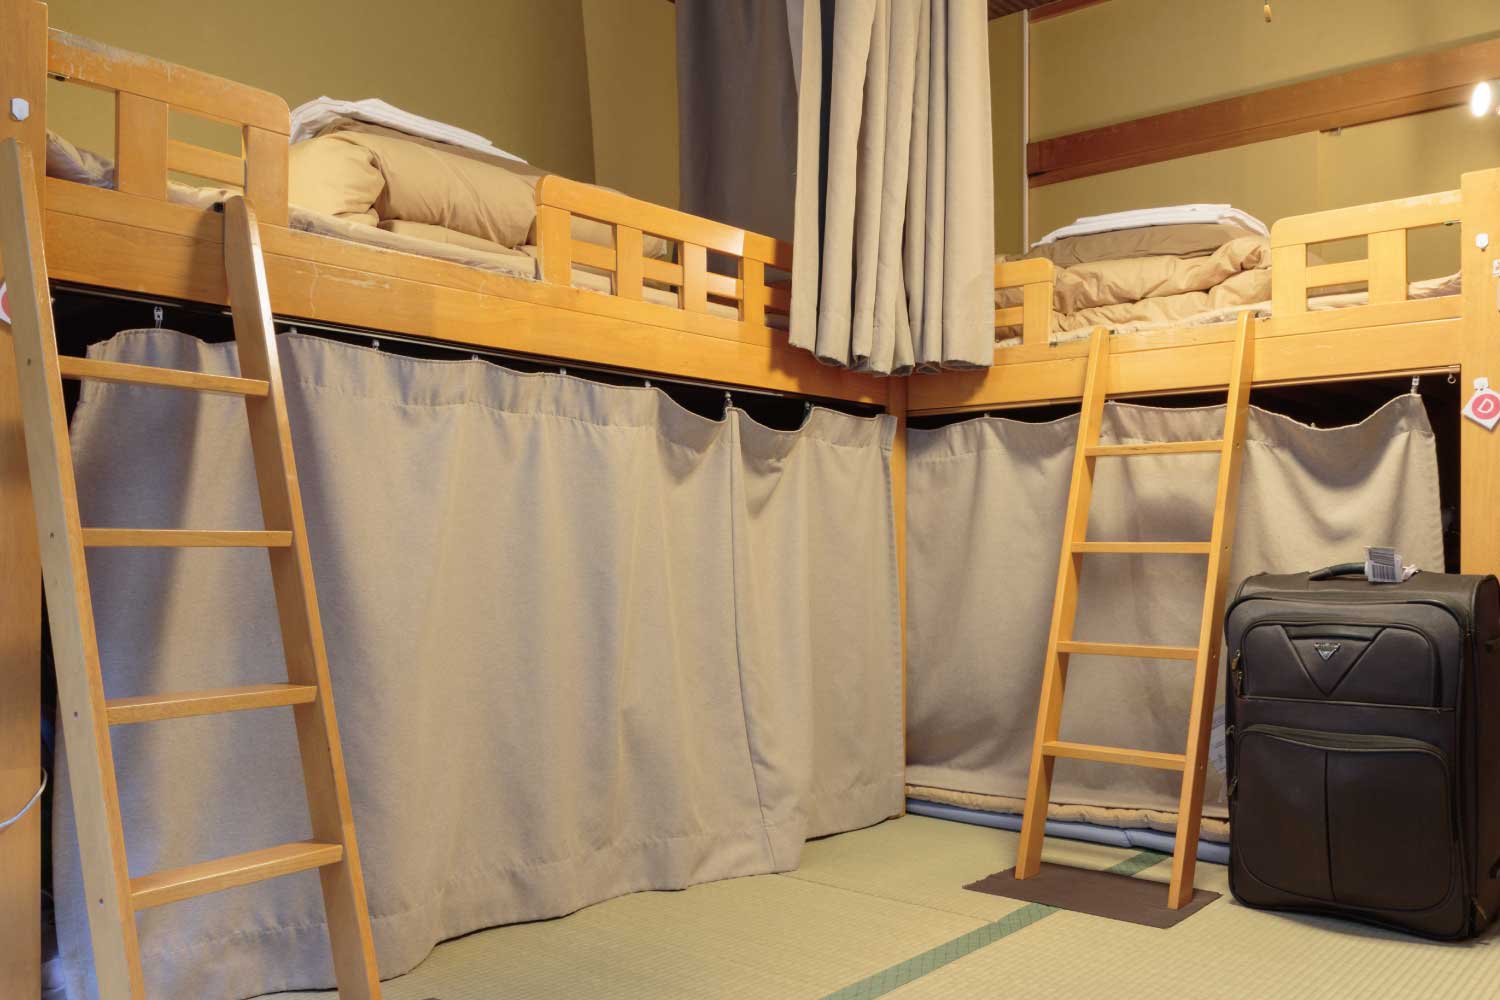 4 Bed Mixed Dormitory Room